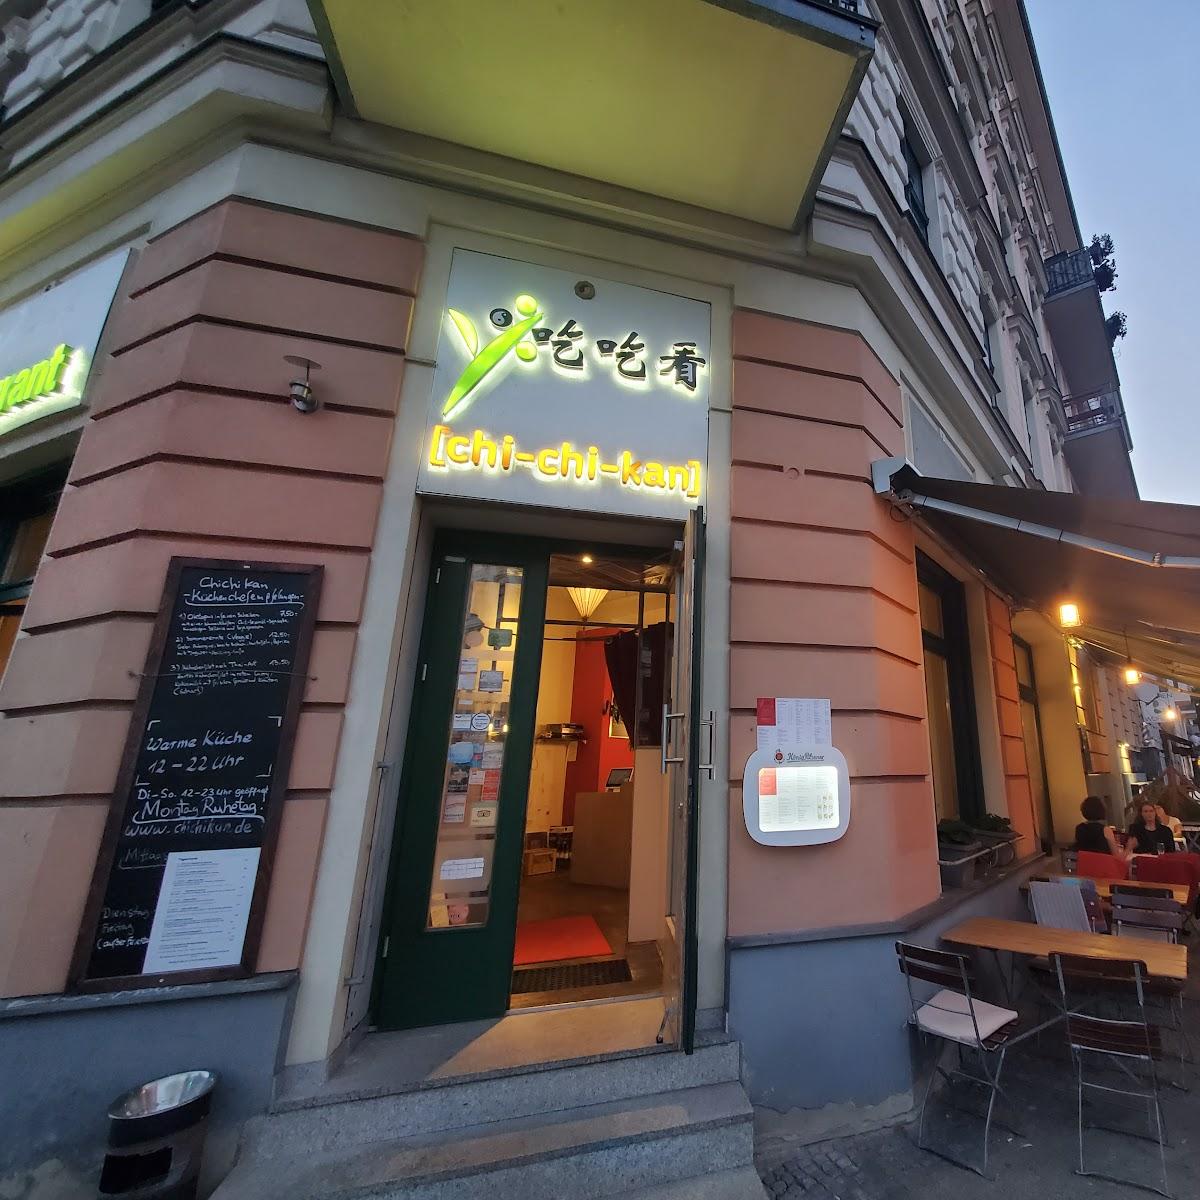 Restaurant "Chichikan" in Berlin